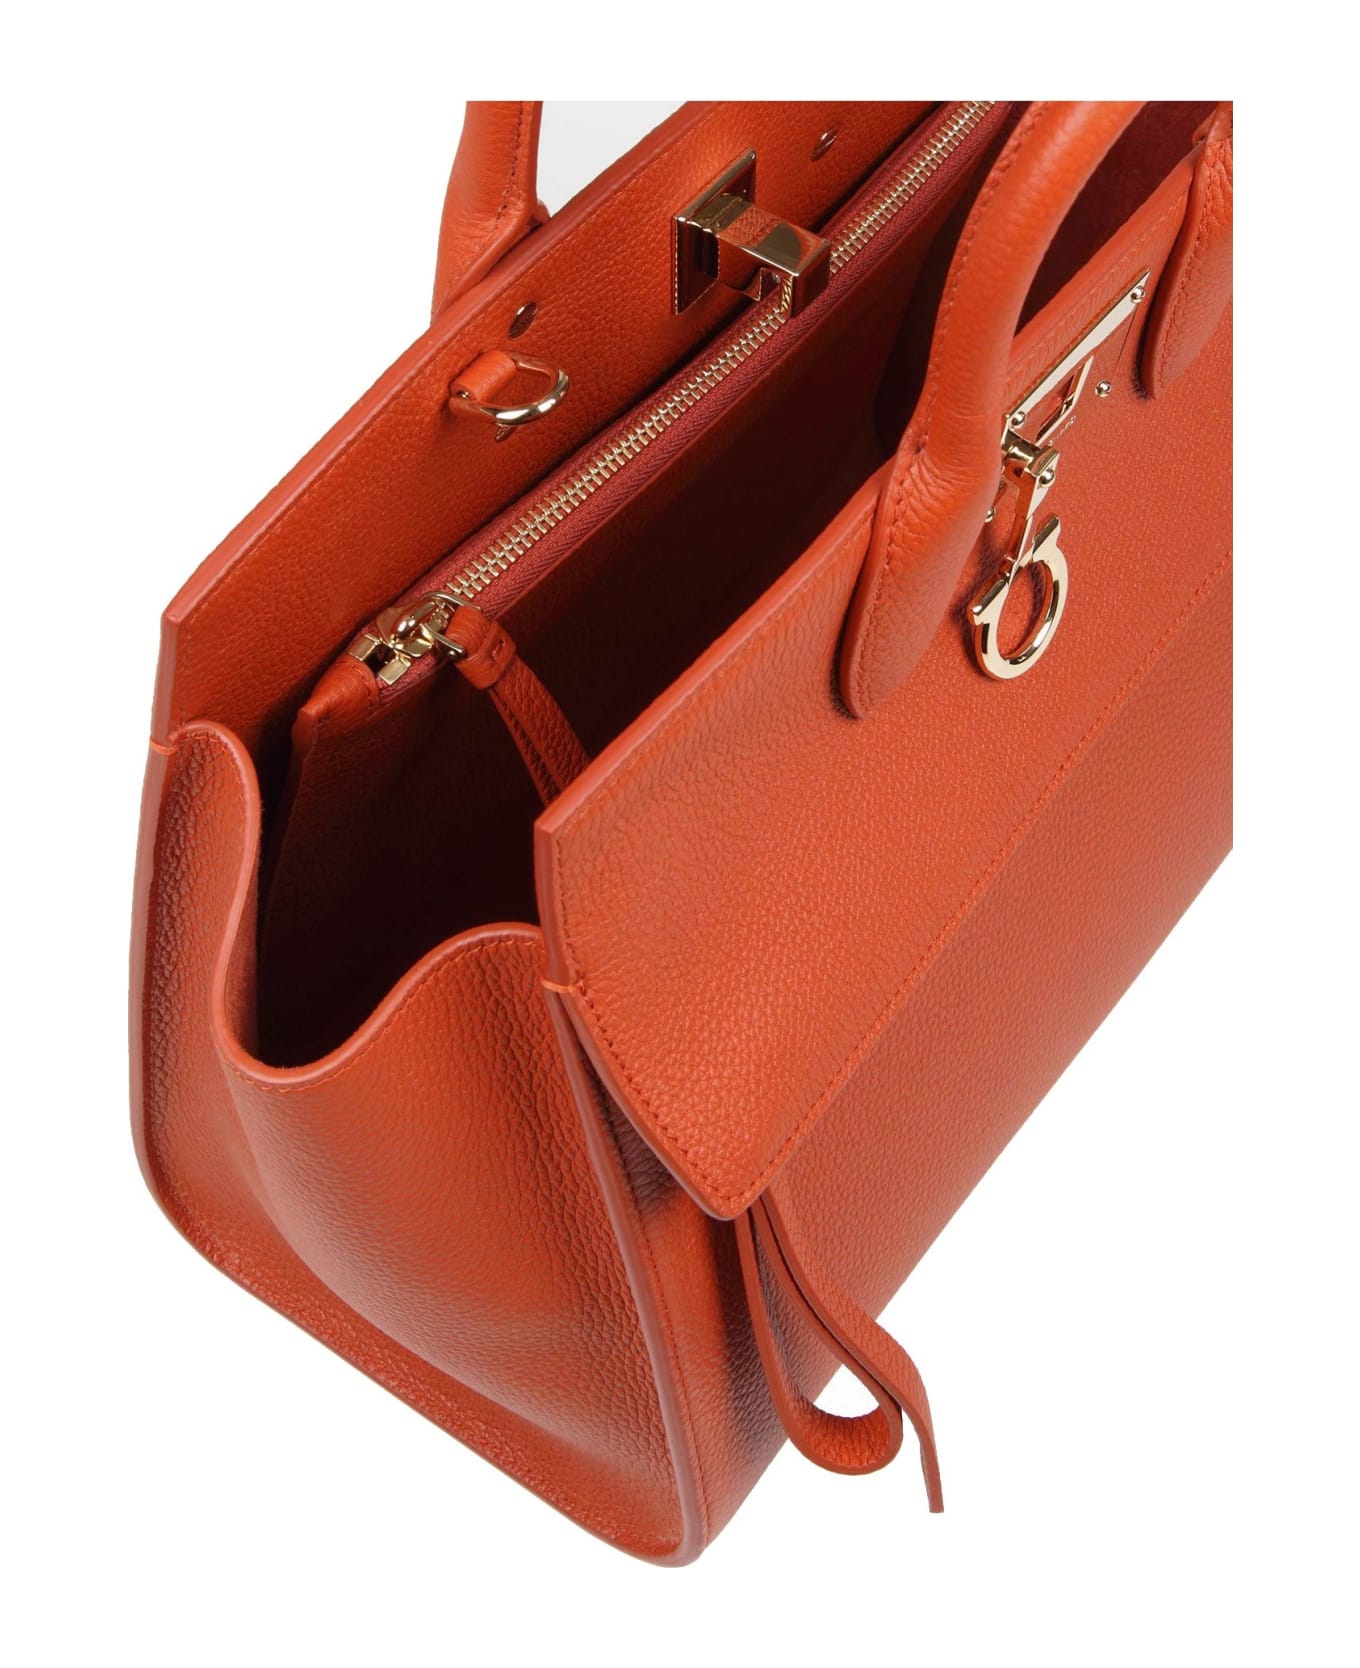 Ferragamo Studio Sof Handbag In Terracotta Color Leather - Terracotta